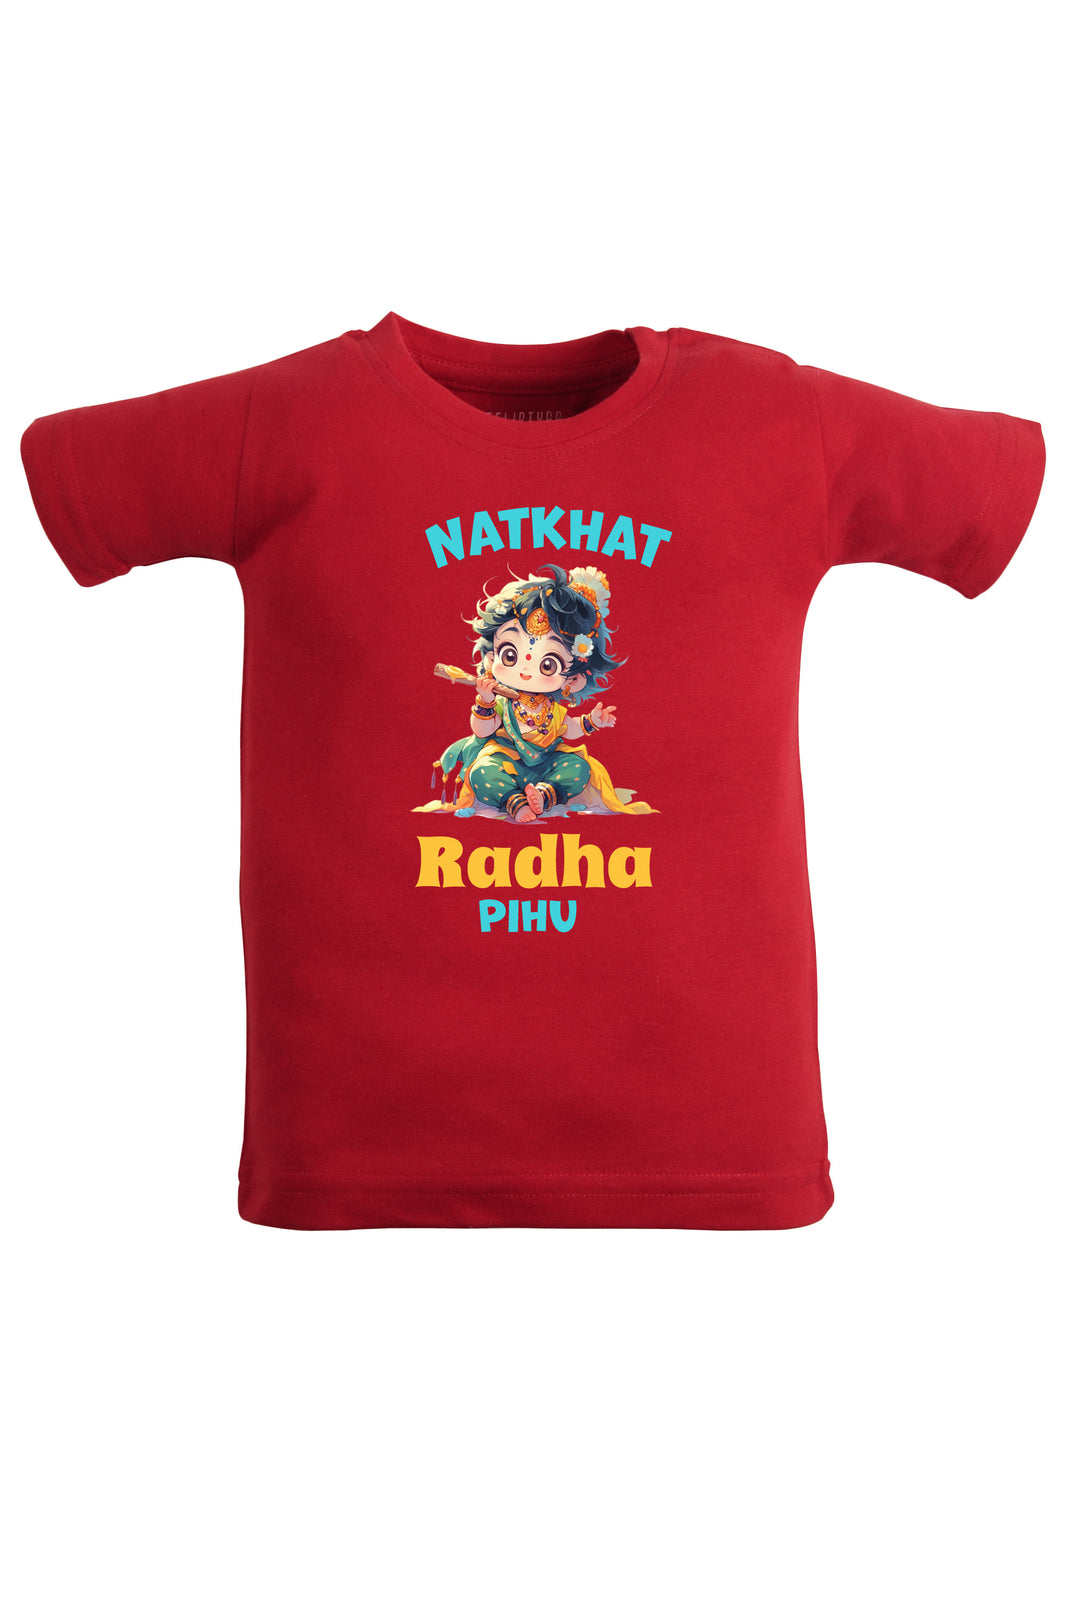 Natkhat Radha w/ Custom Name